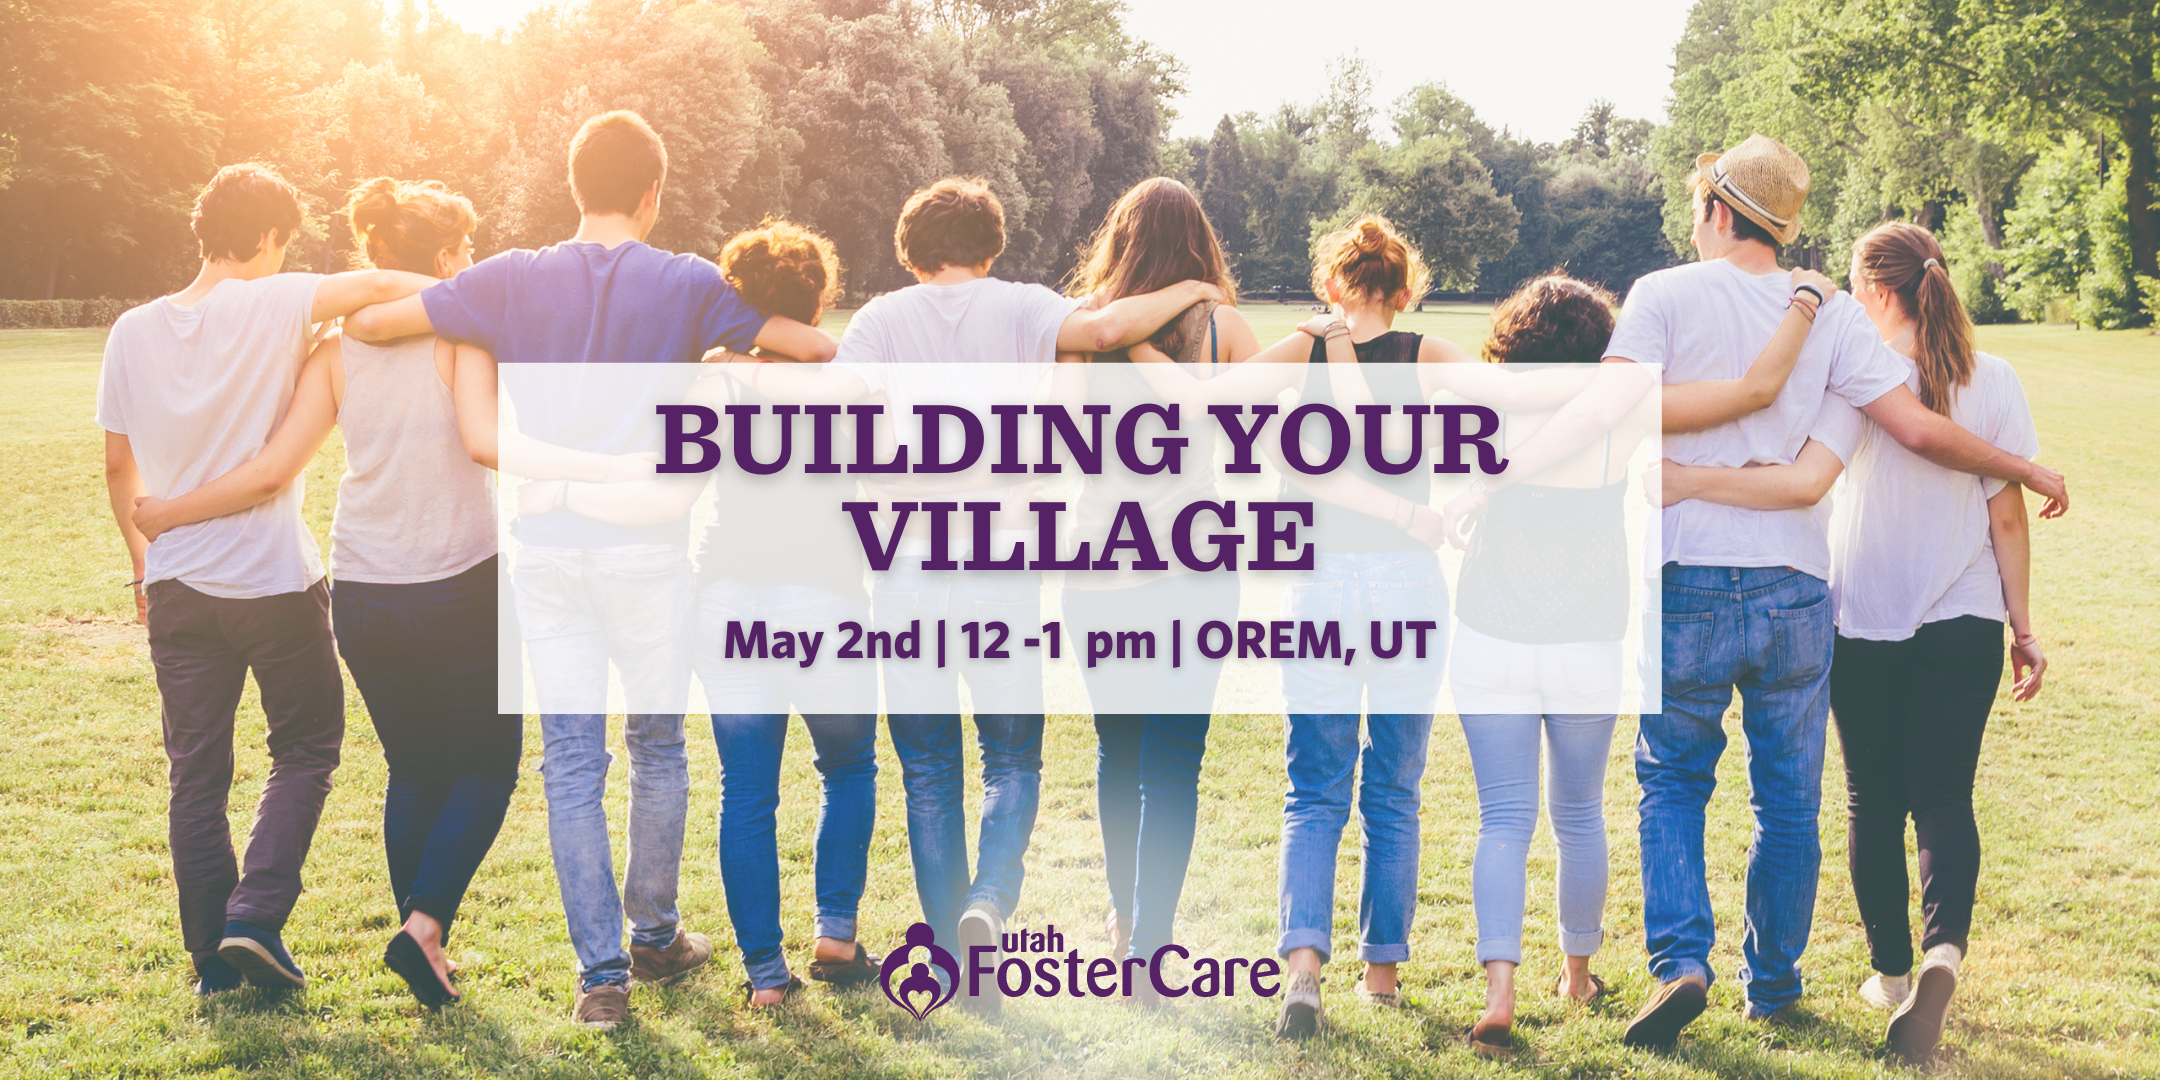 Building Your Village - Orem - Utah Foster Care